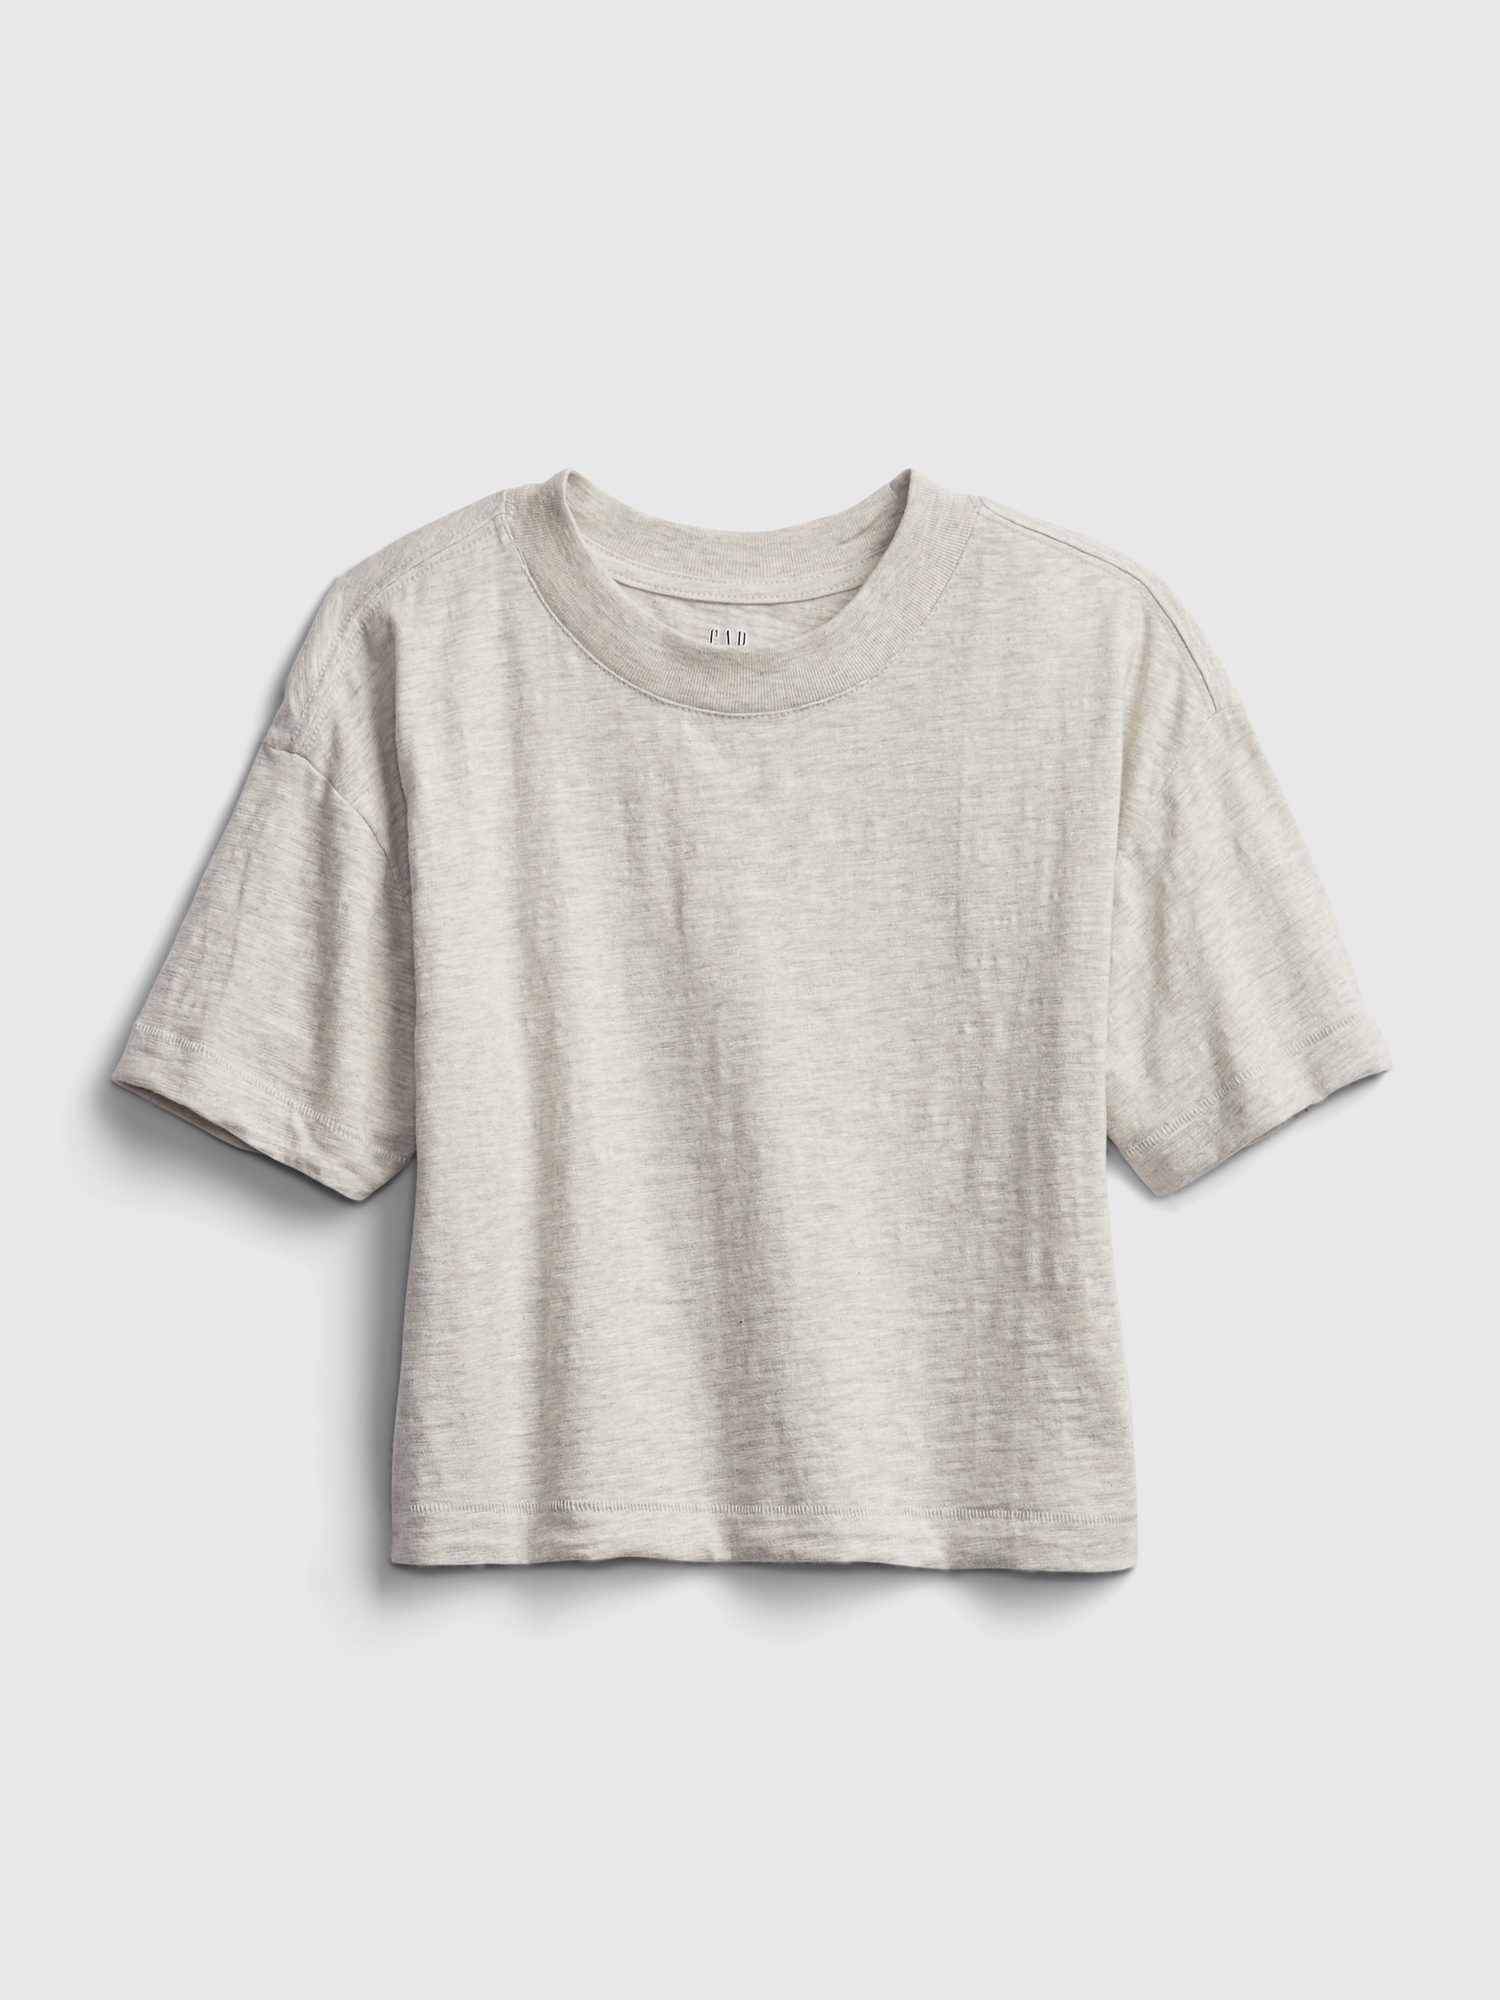 sadness editorial Atlas Teen 100% Organic Cotton Boxy T-Shirt | Gap